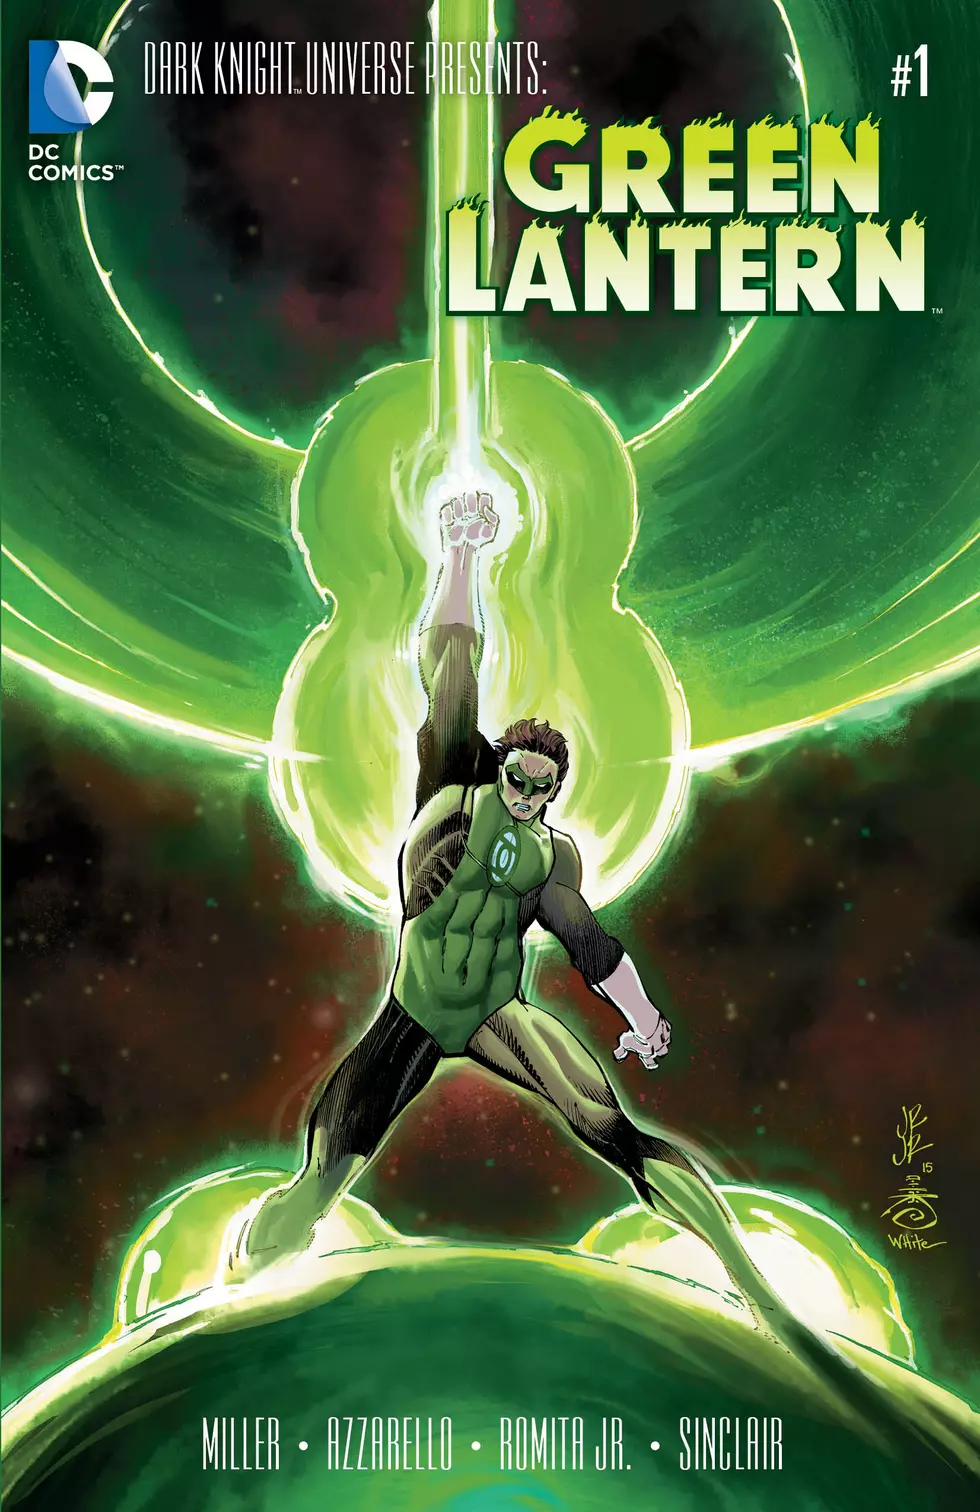 The Emerald Knight Returns in &#8216;Dark Knight Universe Presents: Green Lantern&#8217; [Preview]